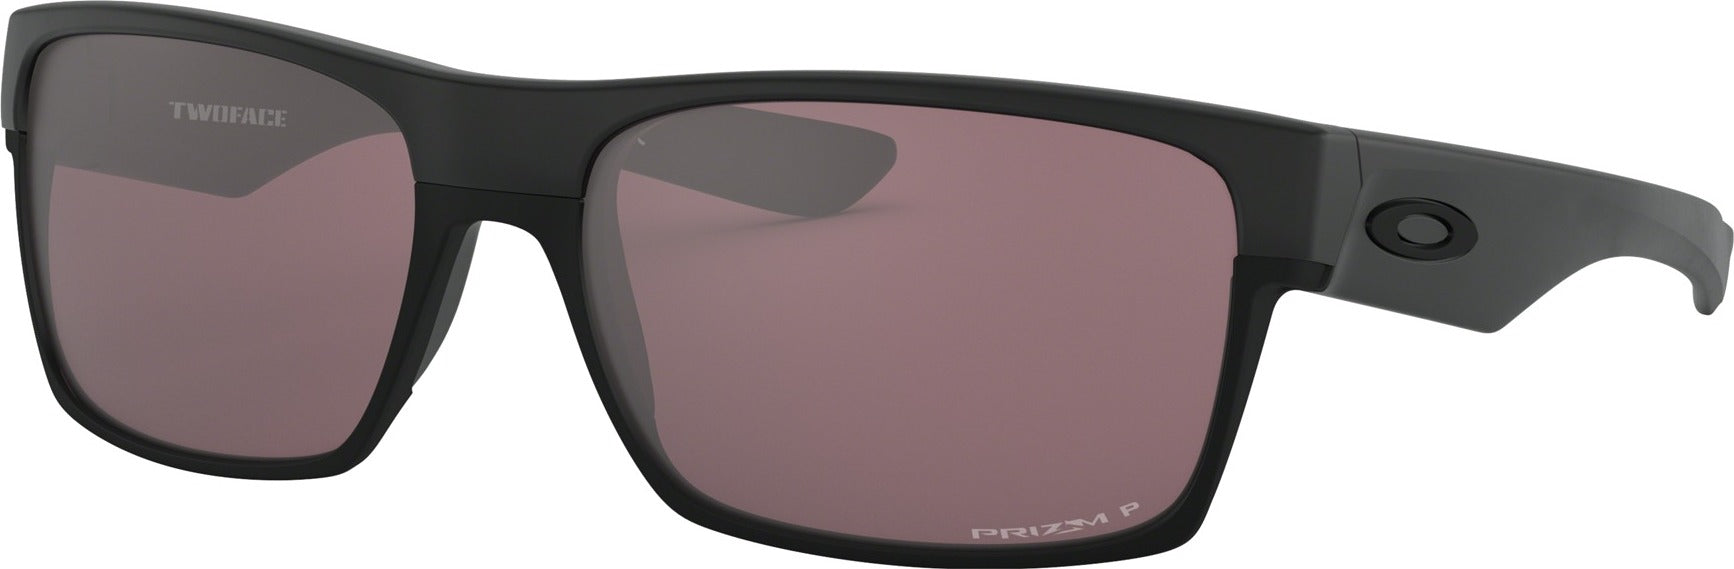 Oakley Two Face Covert Sunglasses - Matte Black - Prizm Daily Polarized  Lens - Men's | Altitude Sports